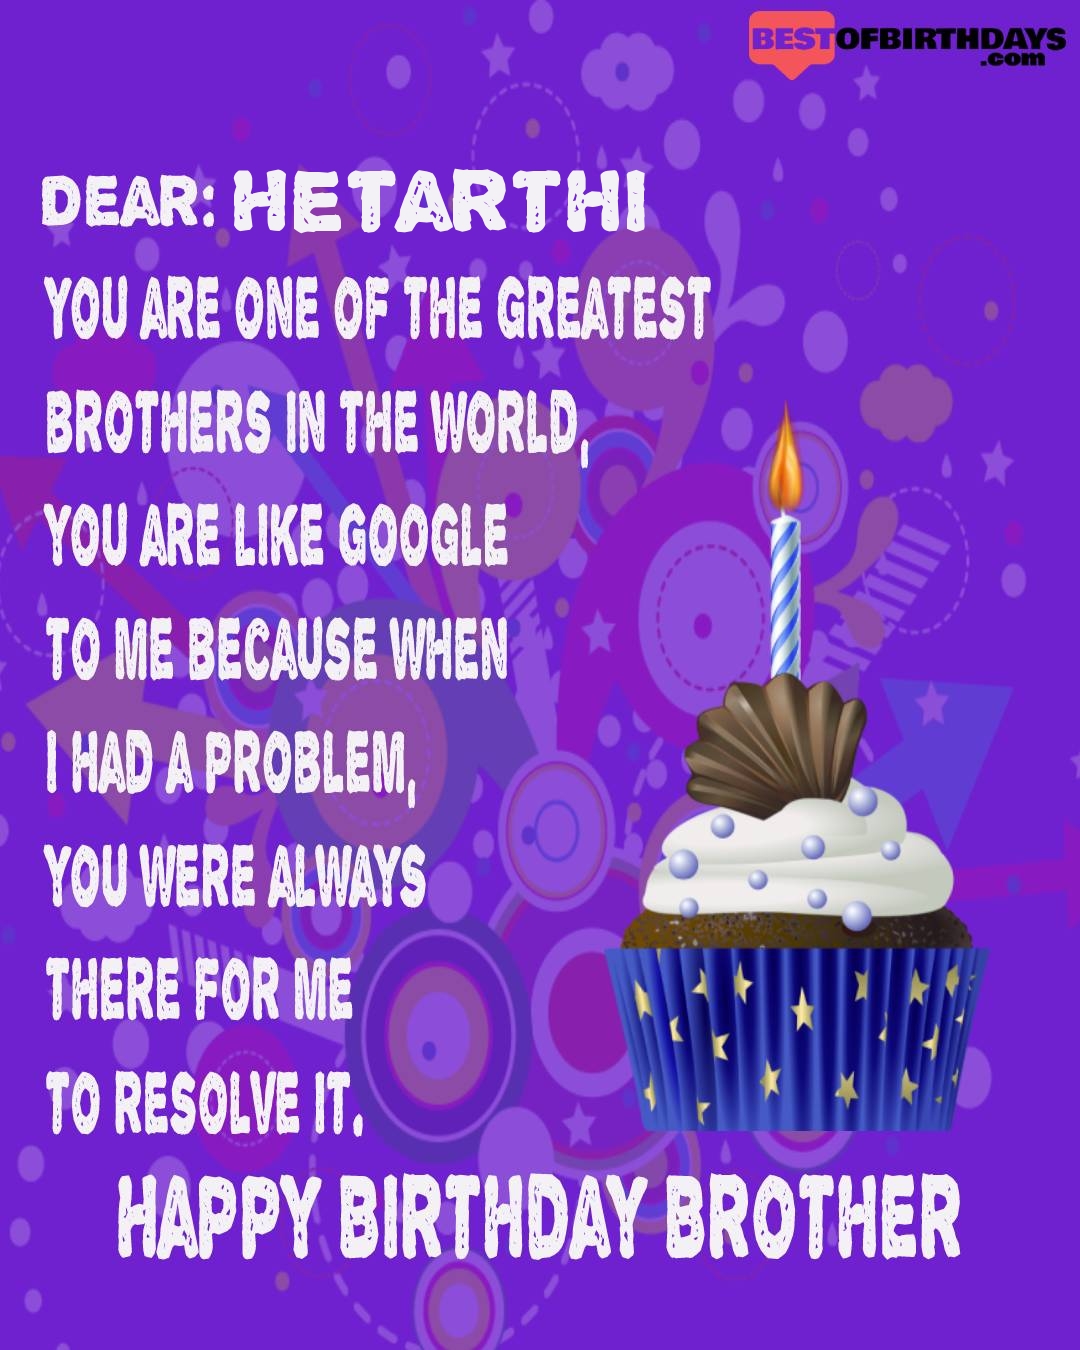 Happy birthday hetarthi bhai brother bro